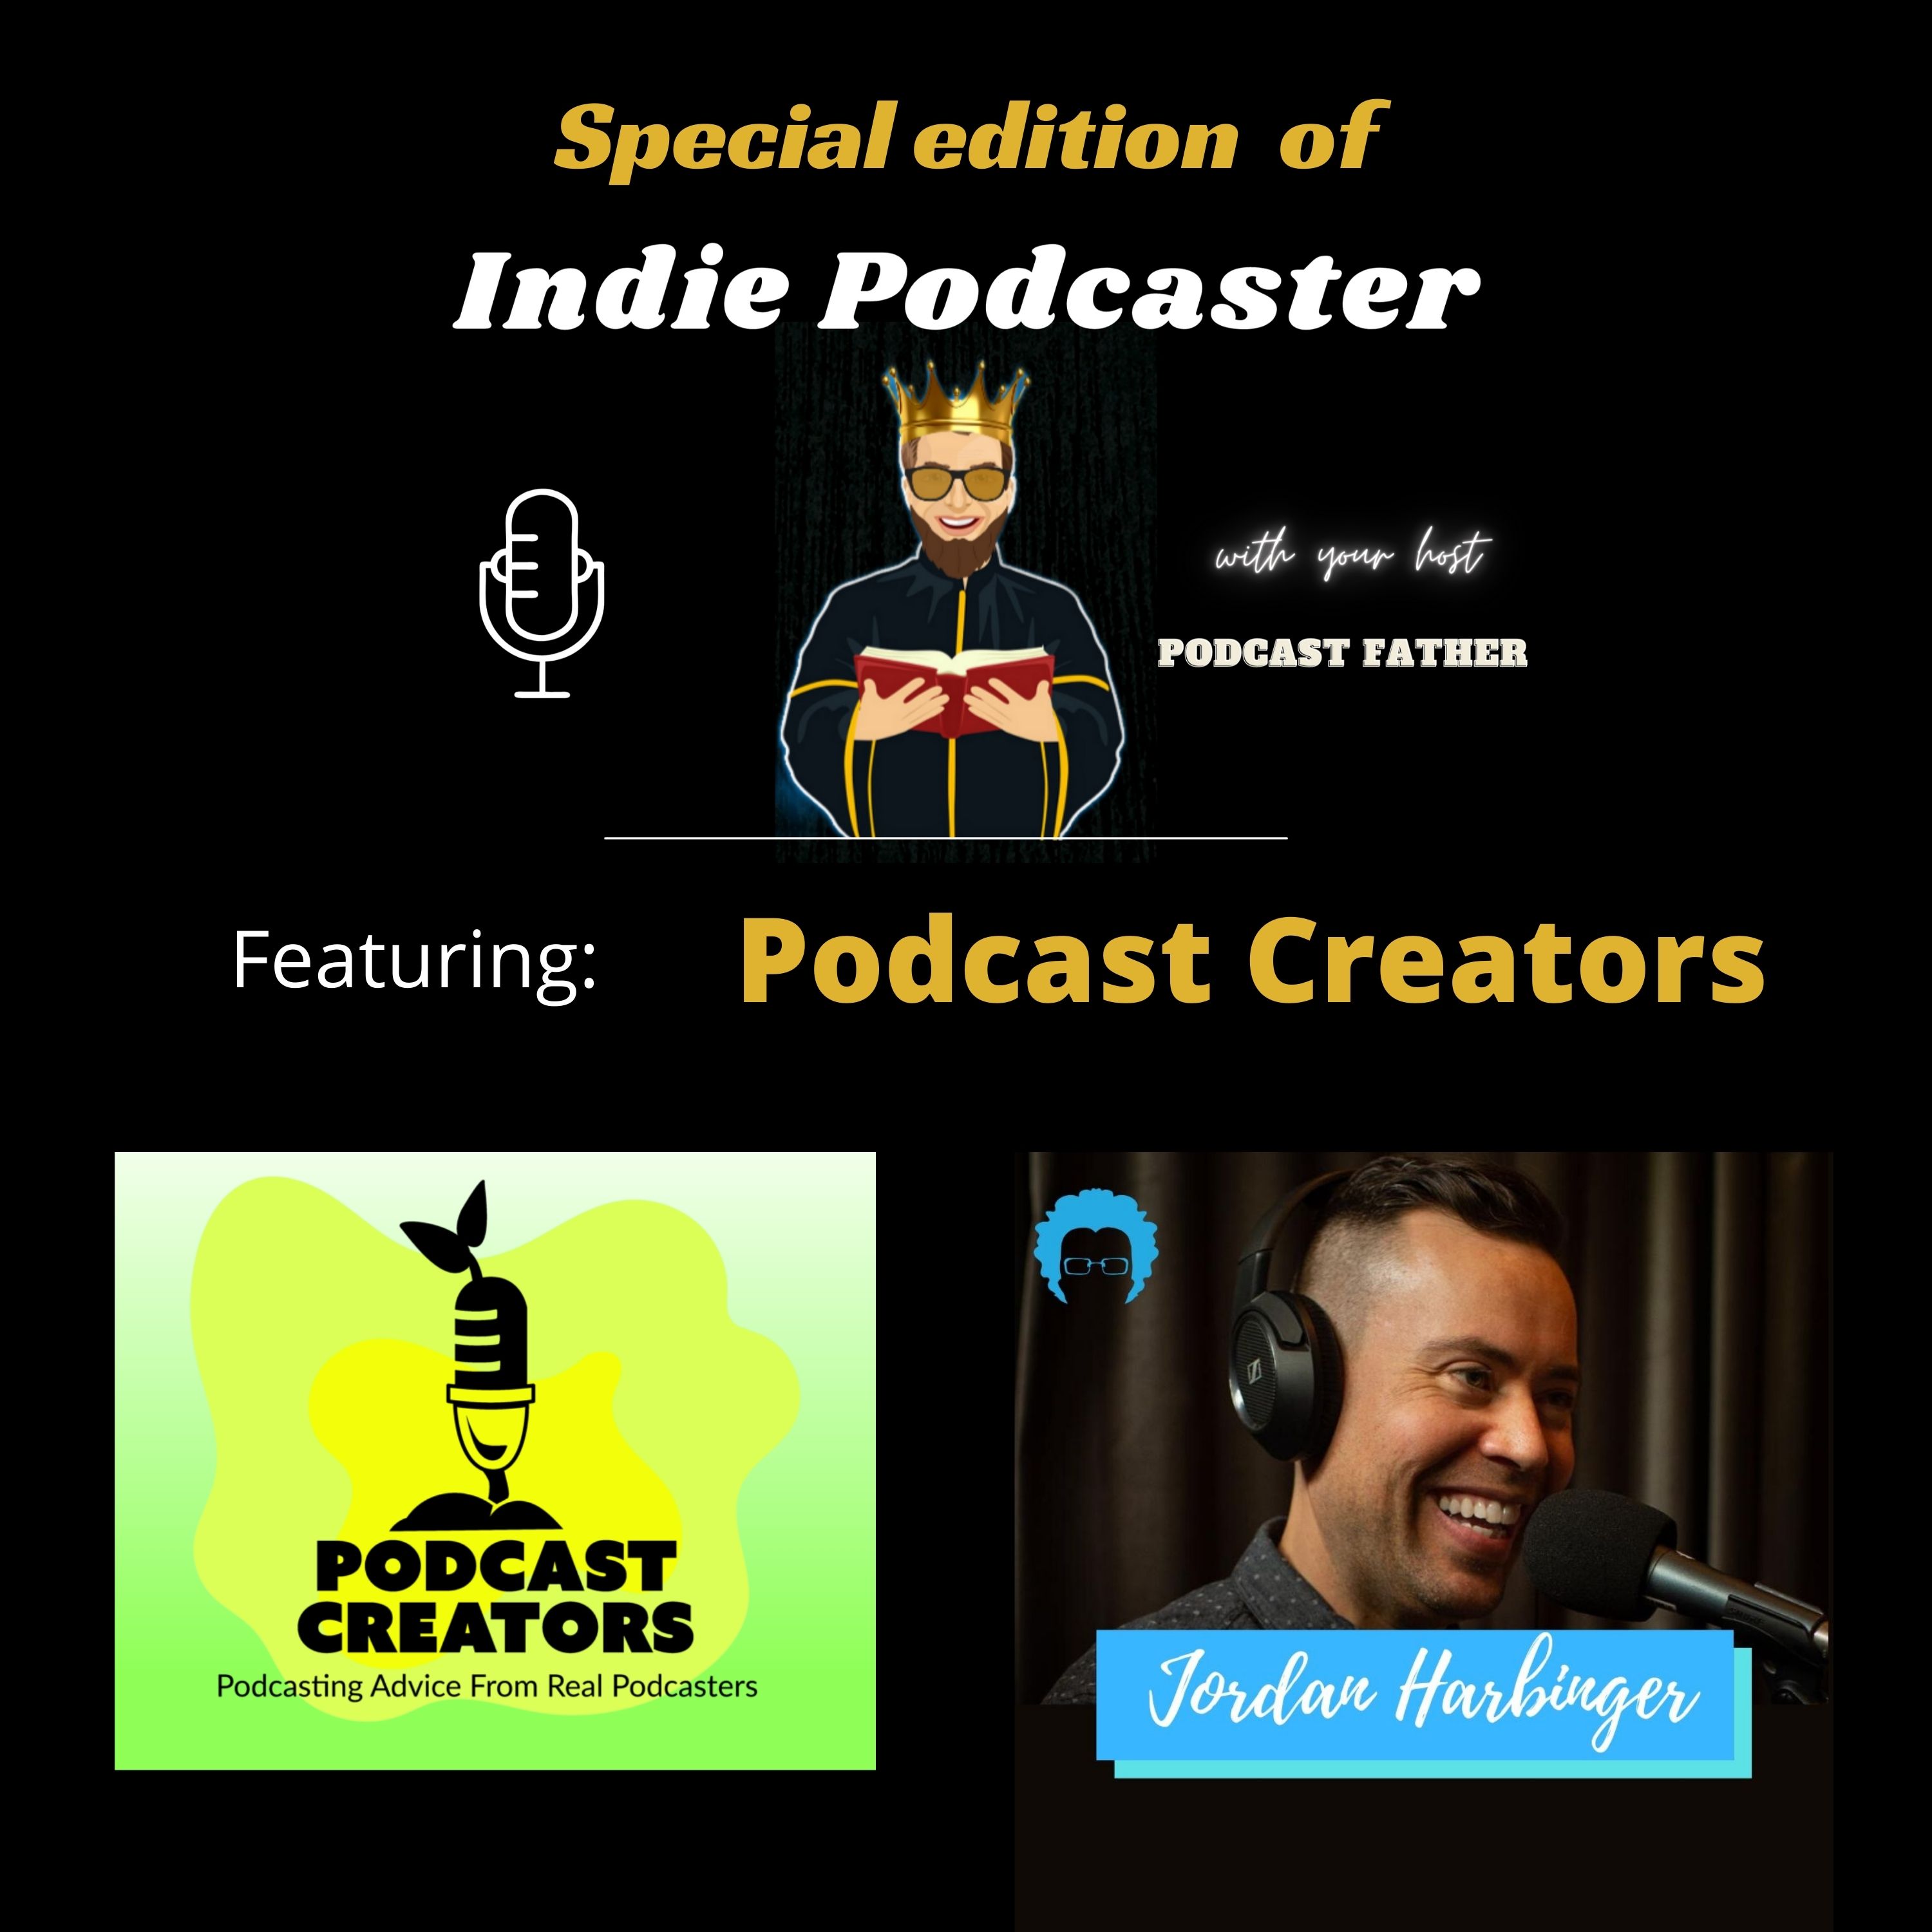 Podcast Creators episode with Jordan Harbinger Image